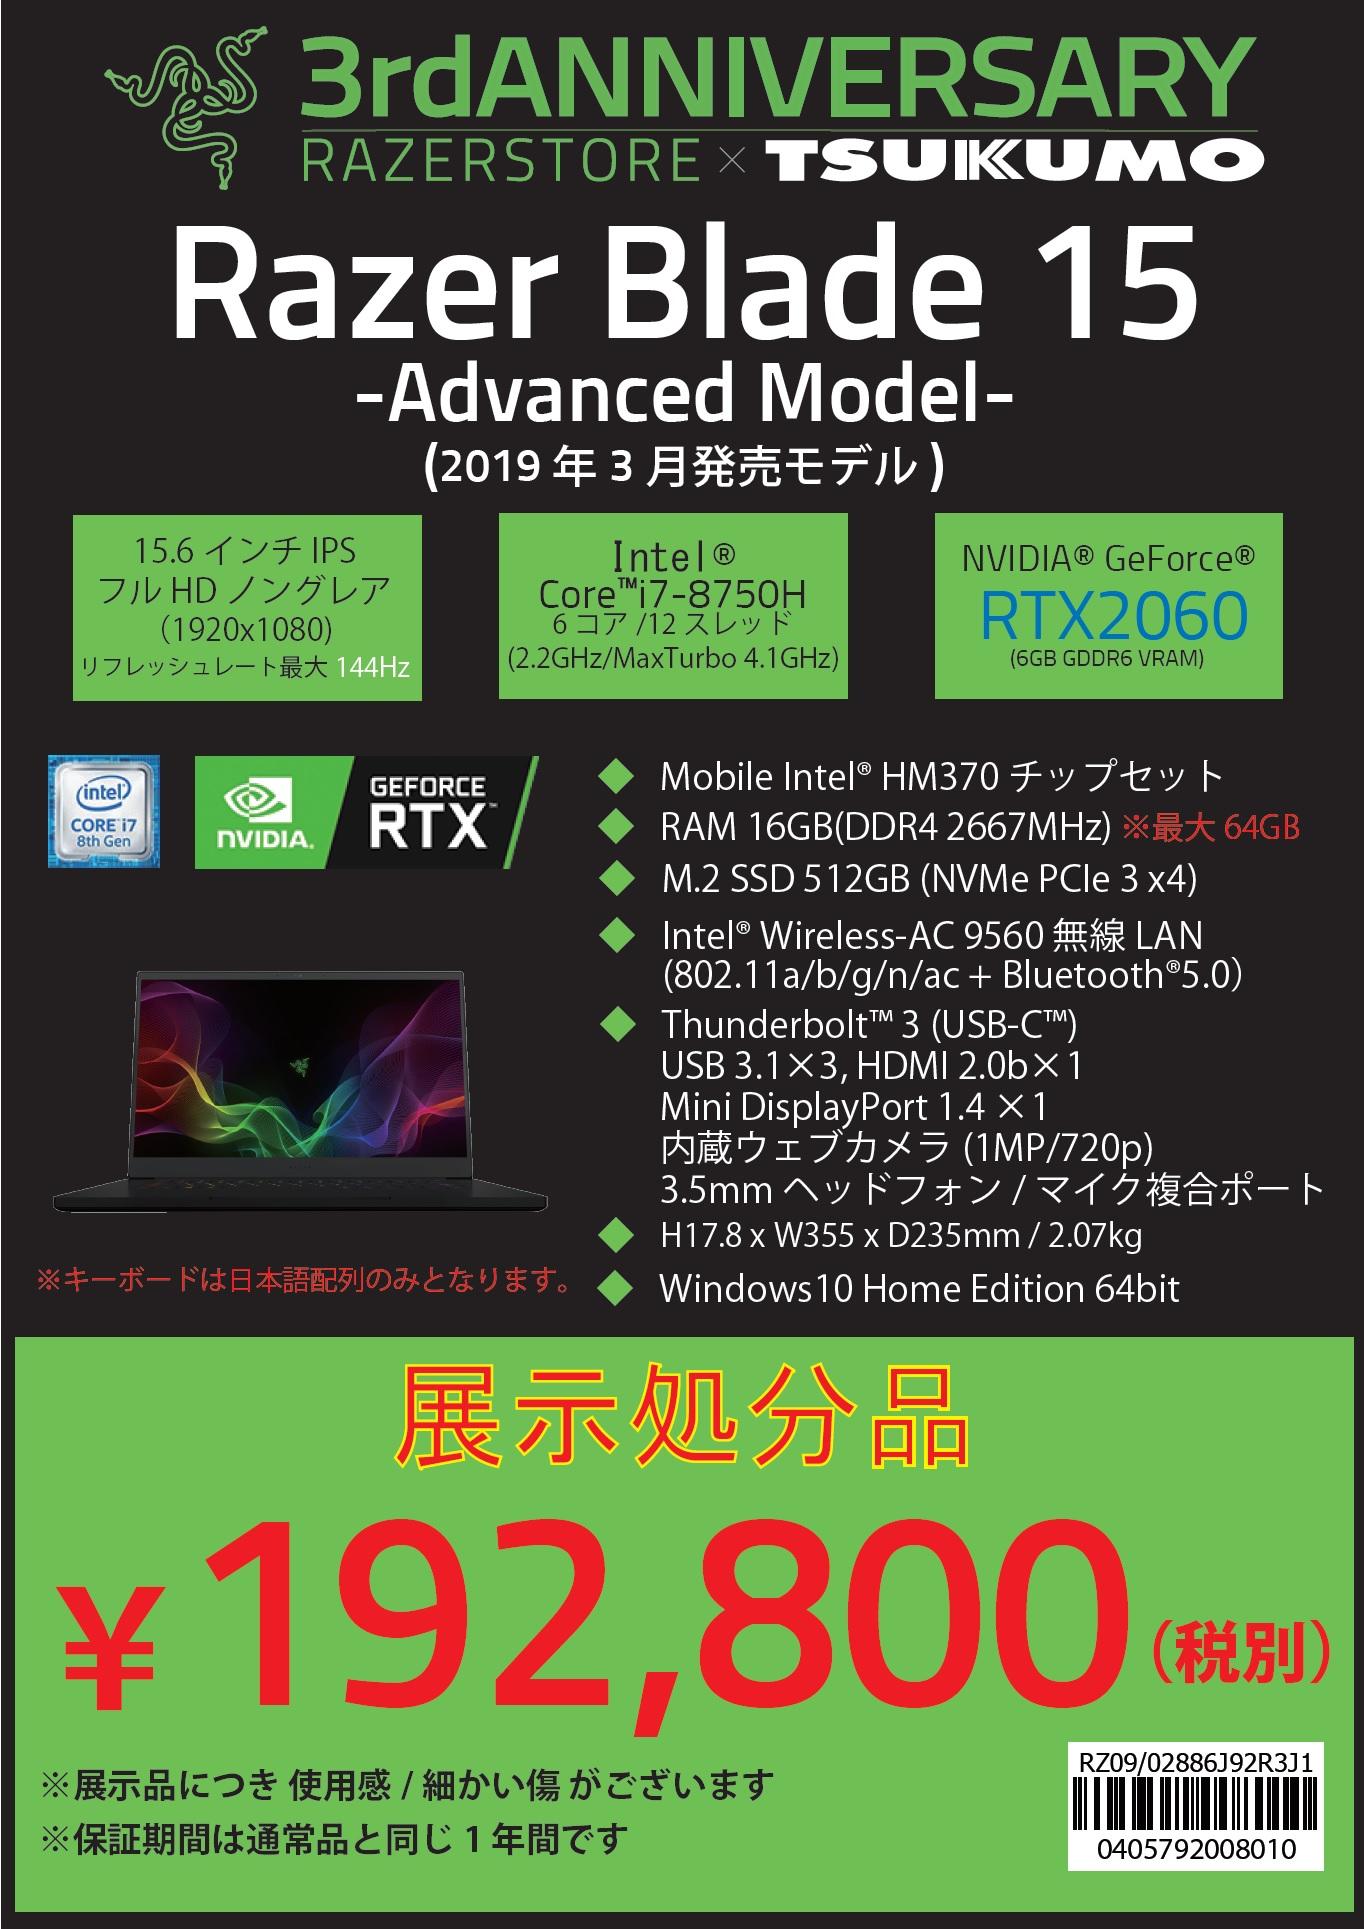 Razer Store X Tsukumo 3周年記念イベント開催 ツクモ東京地区 店舗blog